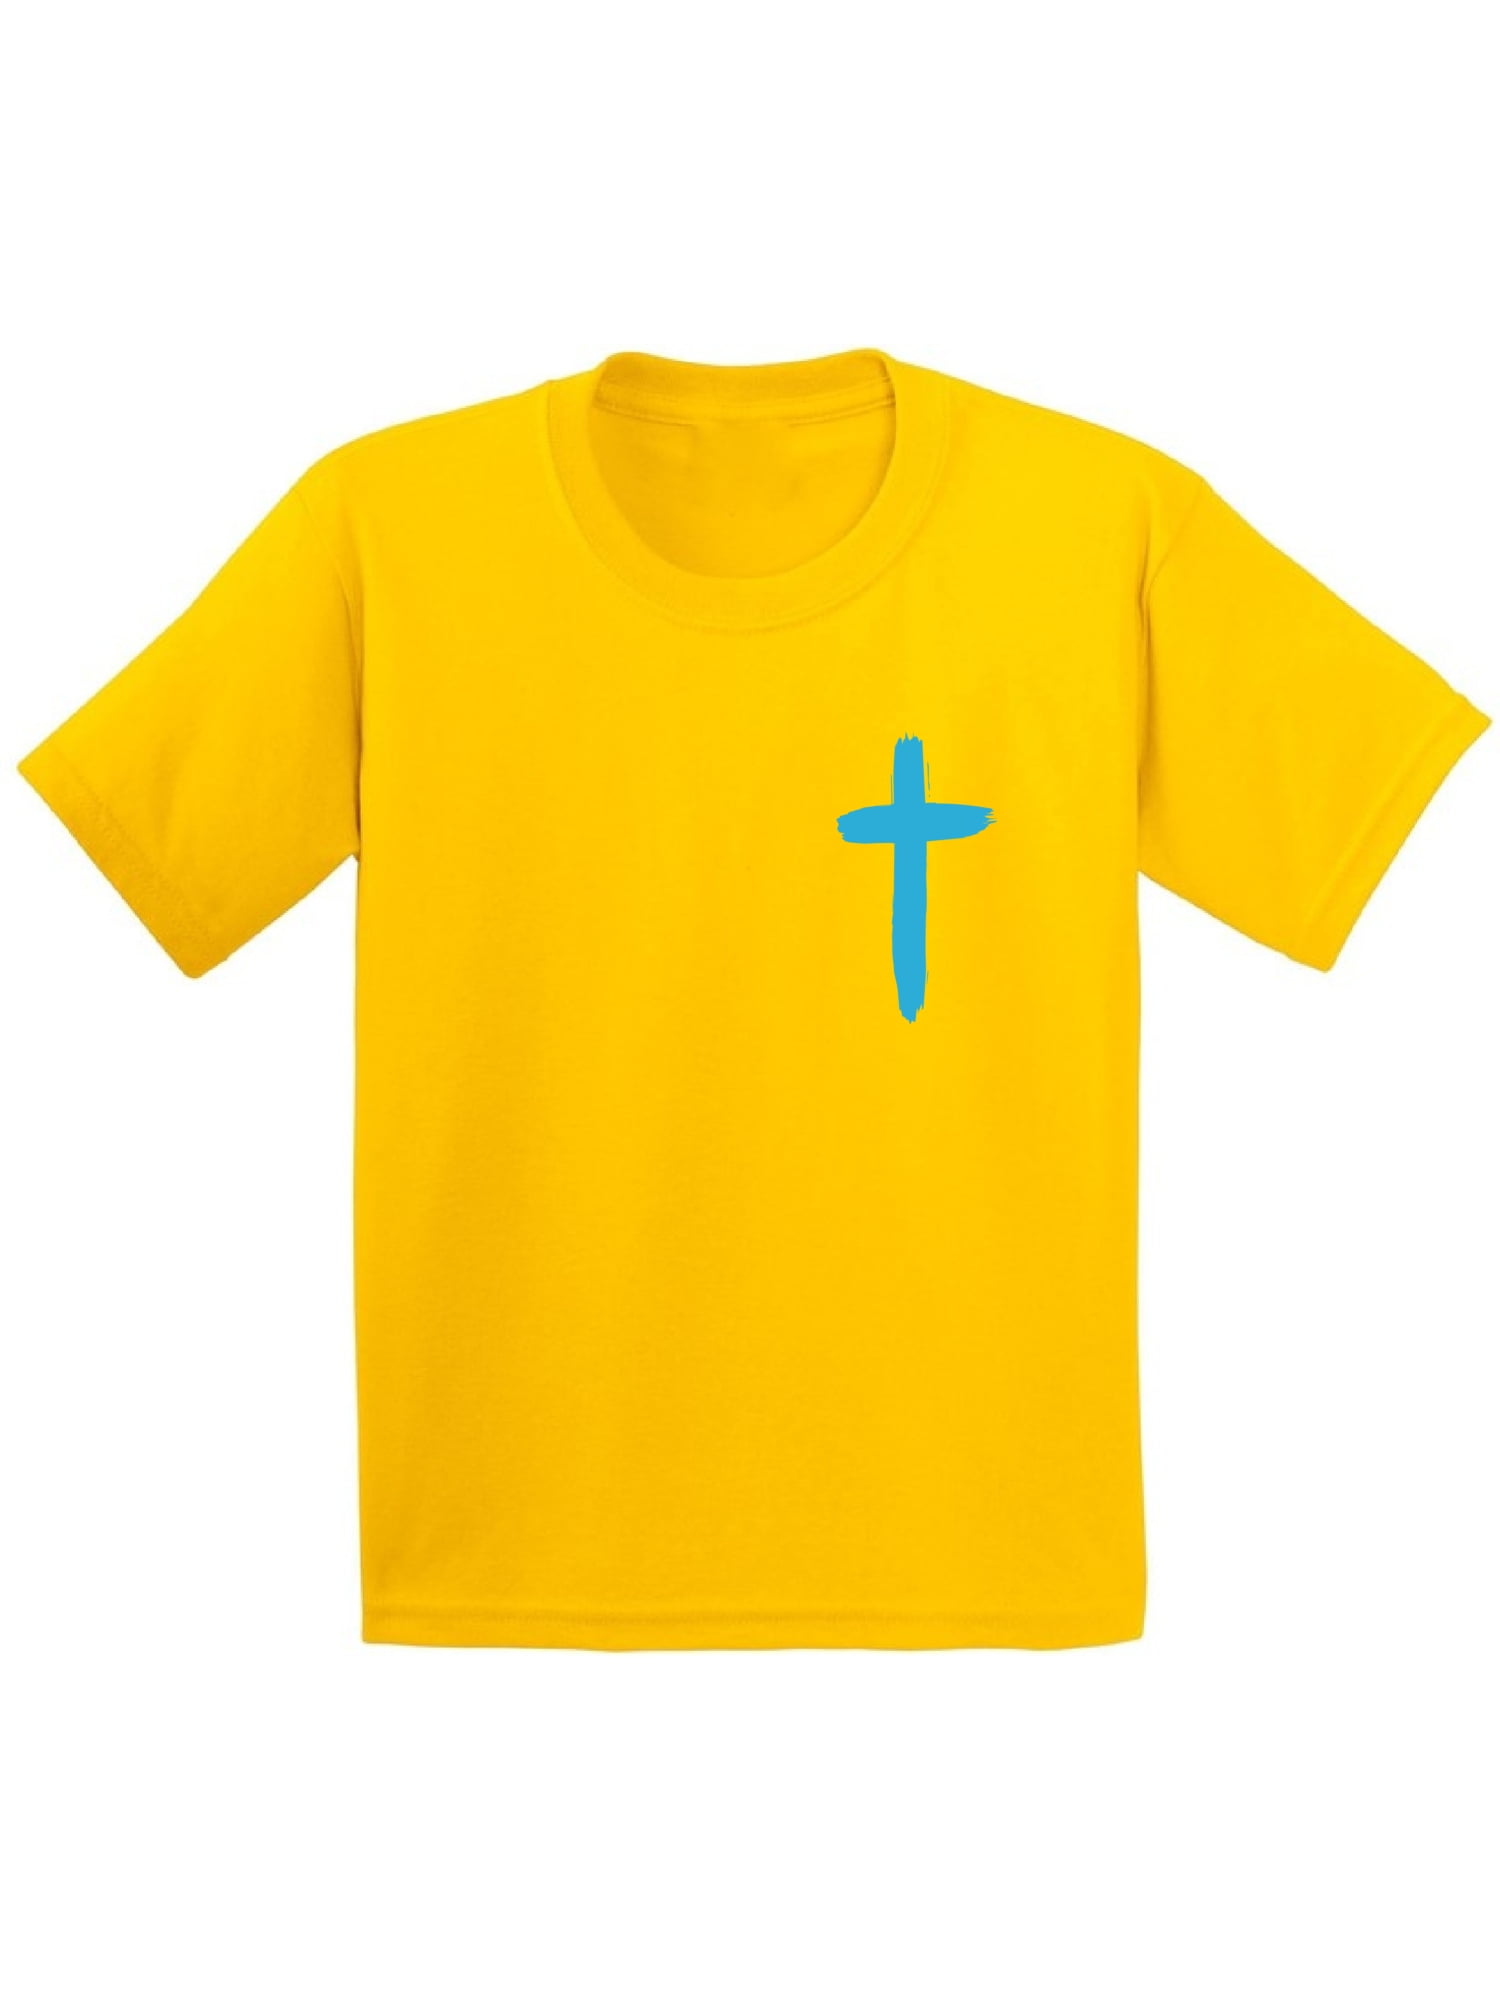 Awkward Styles Blue Cross Youth Shirt Christian T Shirt for Boys ...